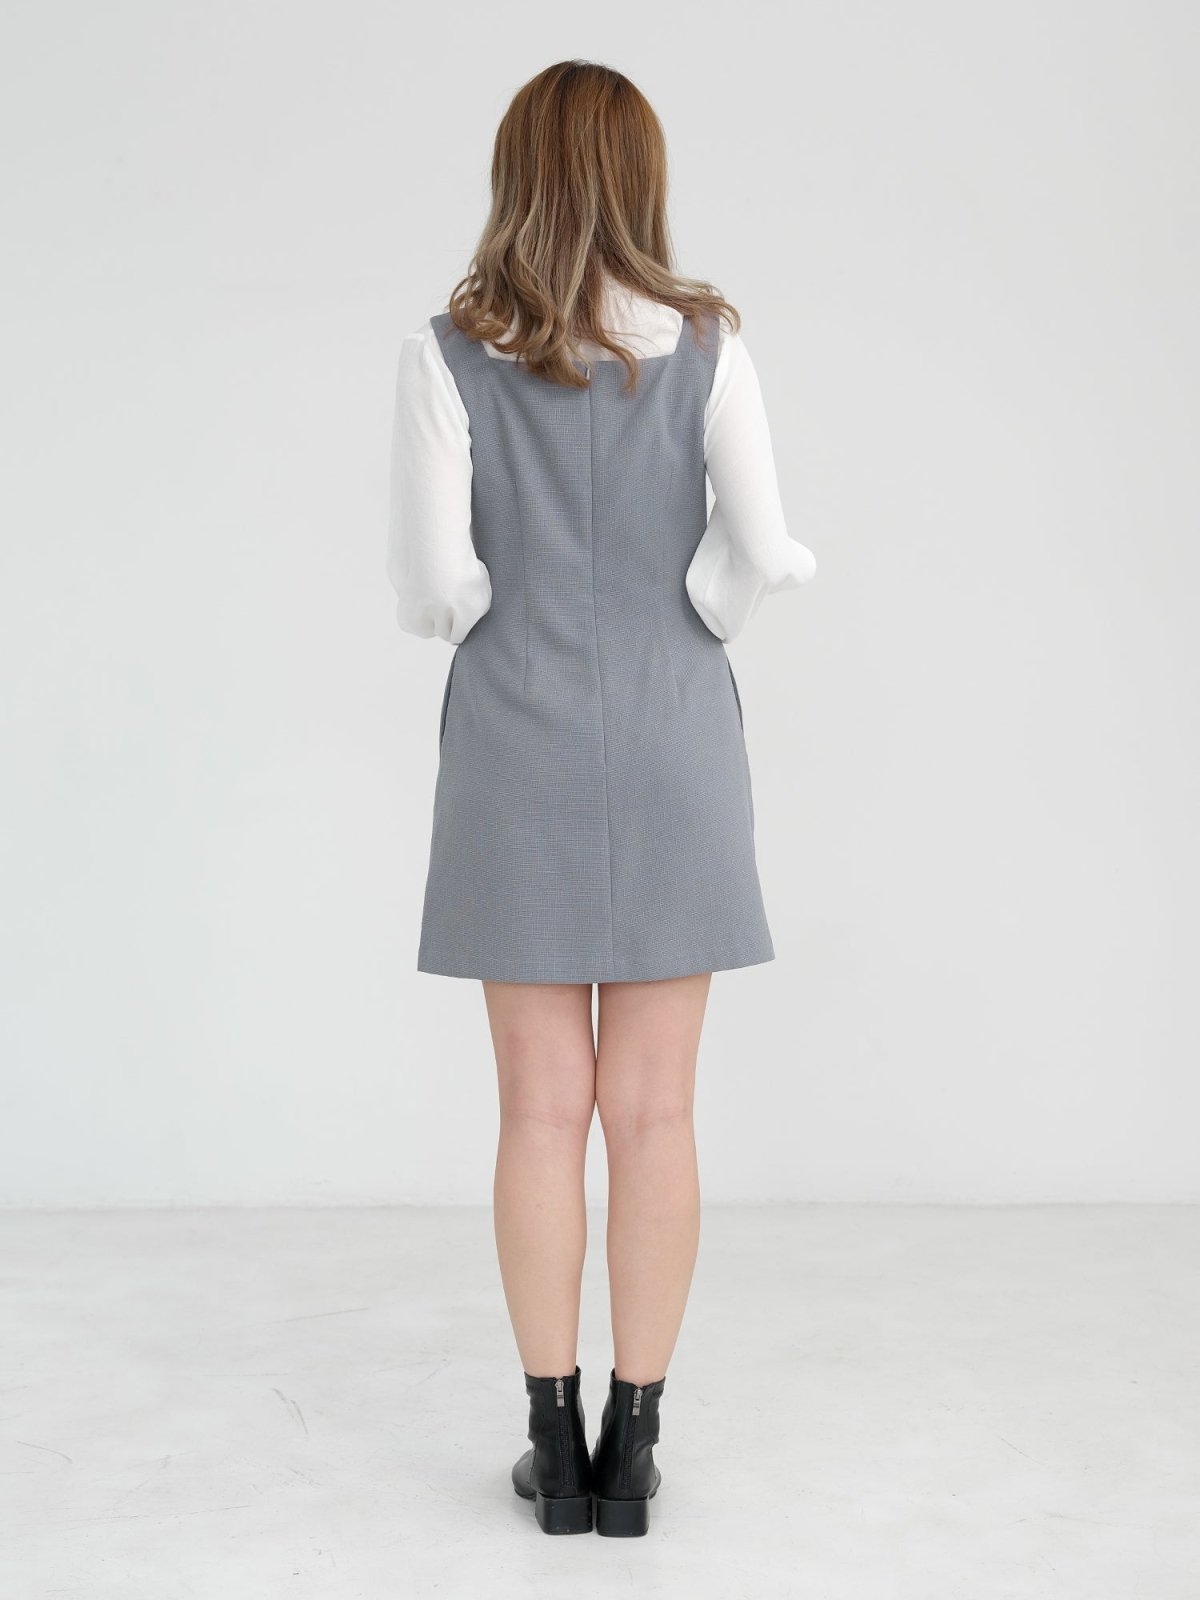 Finley Slim Fit Tweed Dress - DAG-DD1319-23StoneBlueS - Stone Blue - S - D'zage Designs